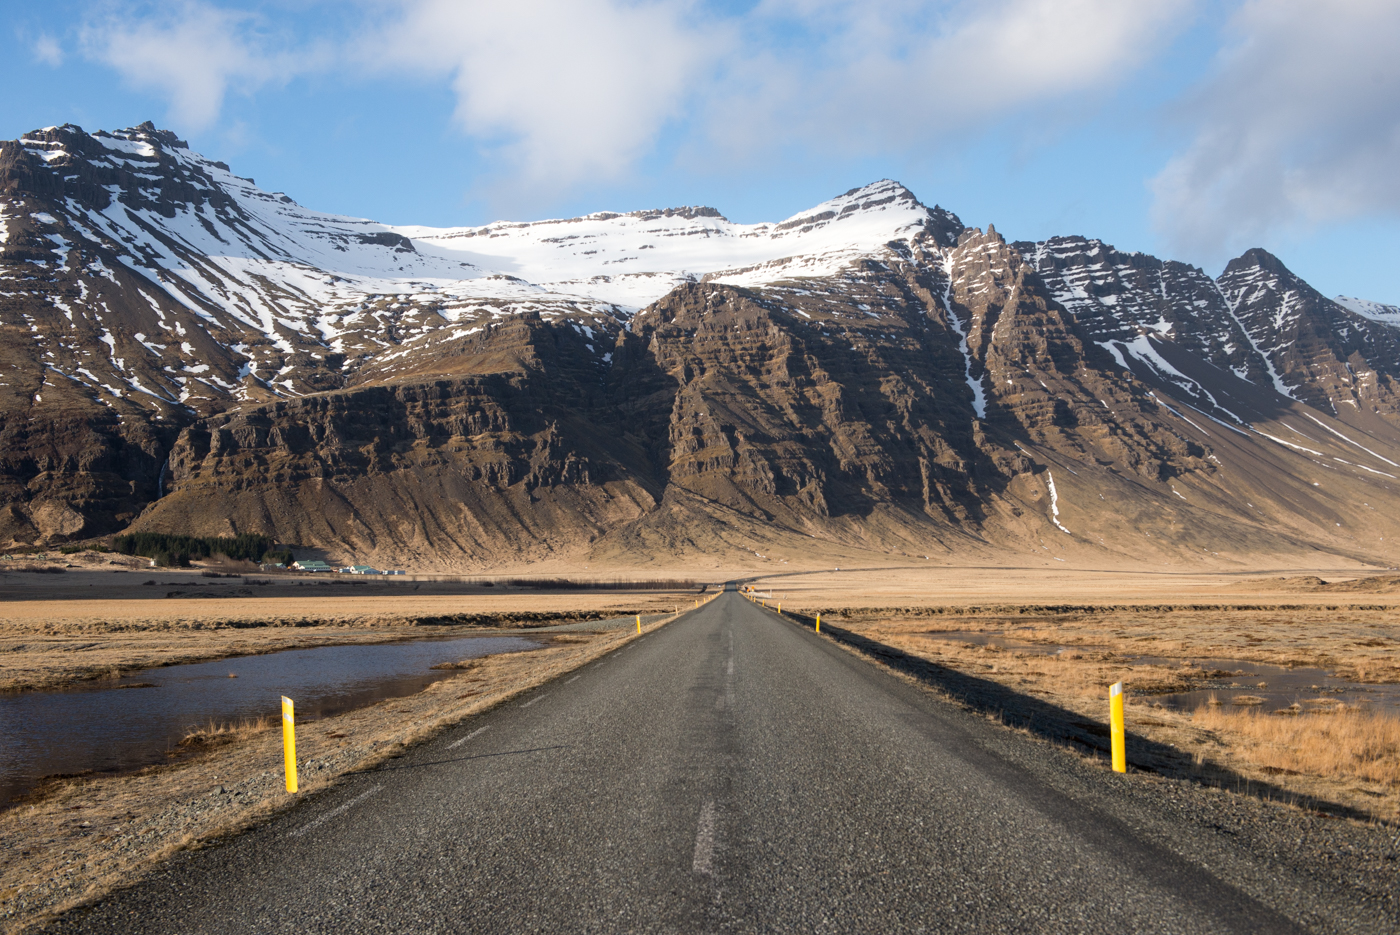 A road trip around Iceland